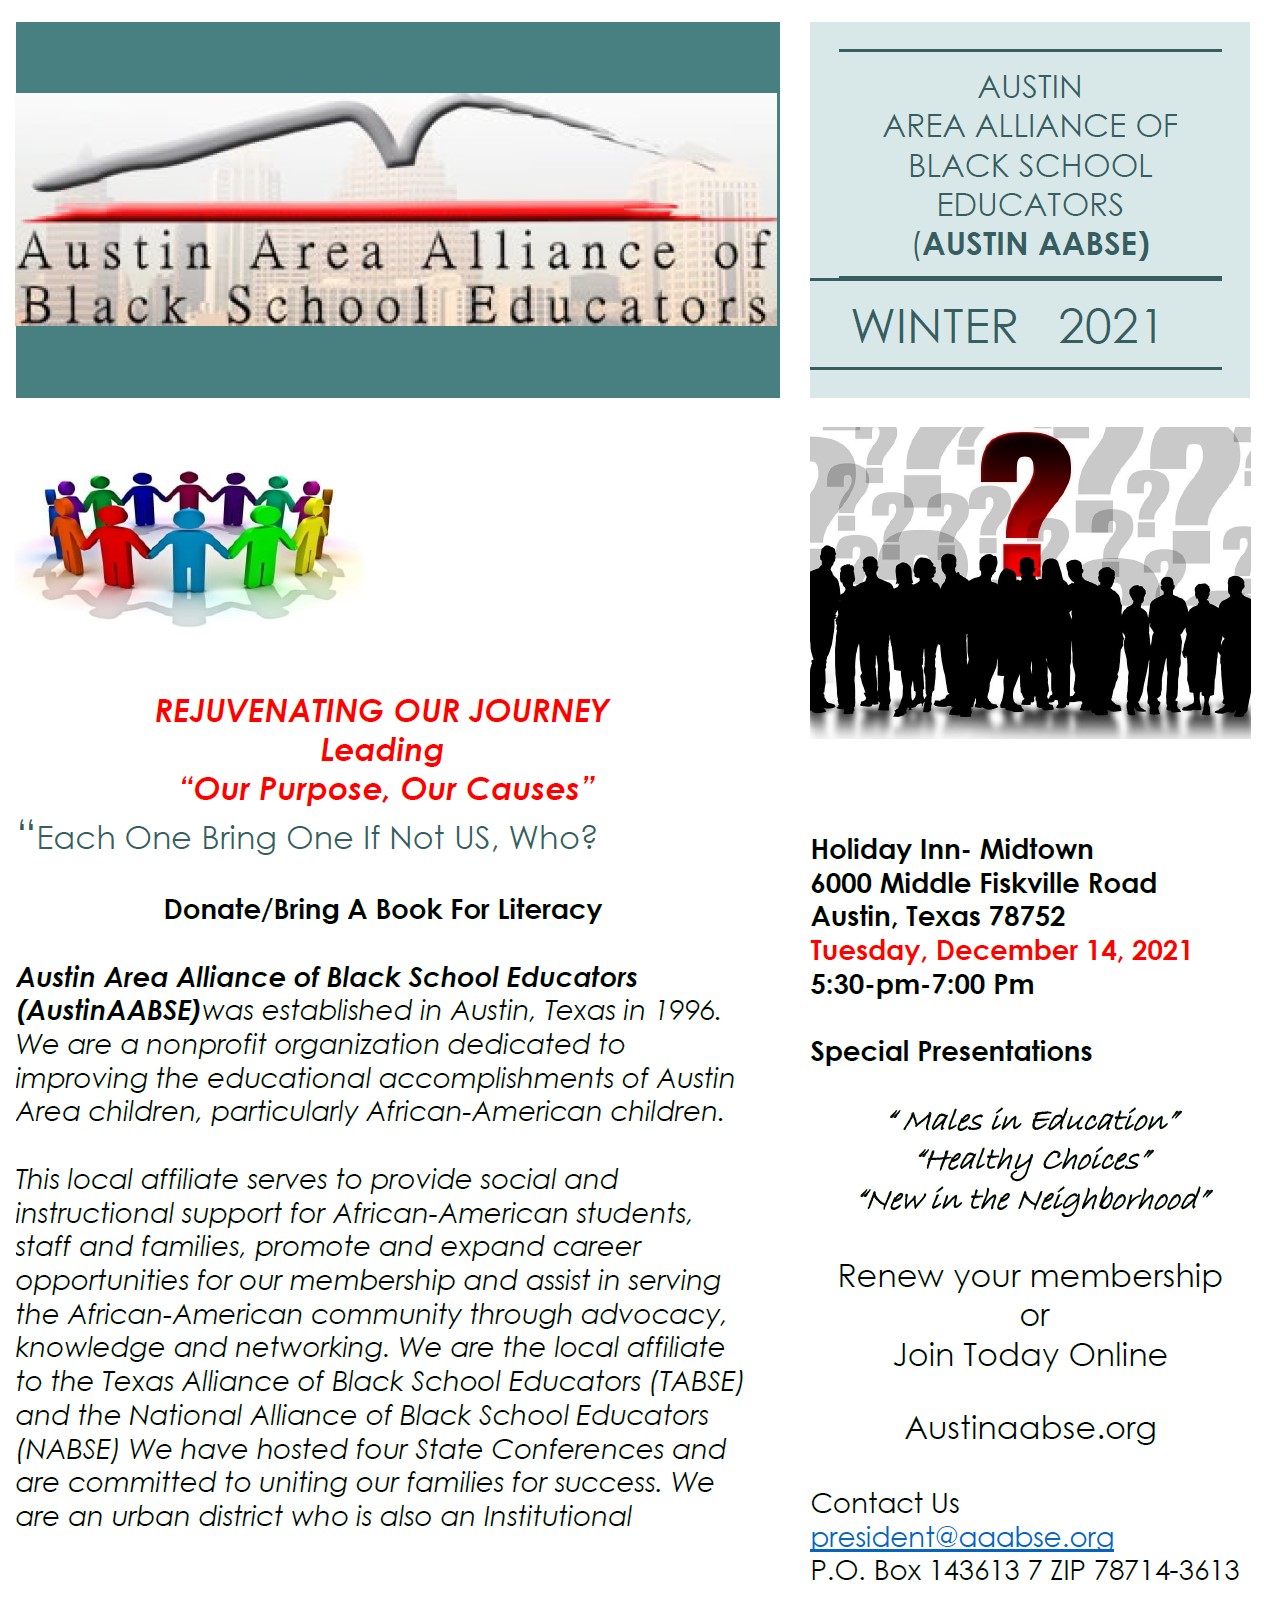 Austin AABSE 2021 Winter Meeting